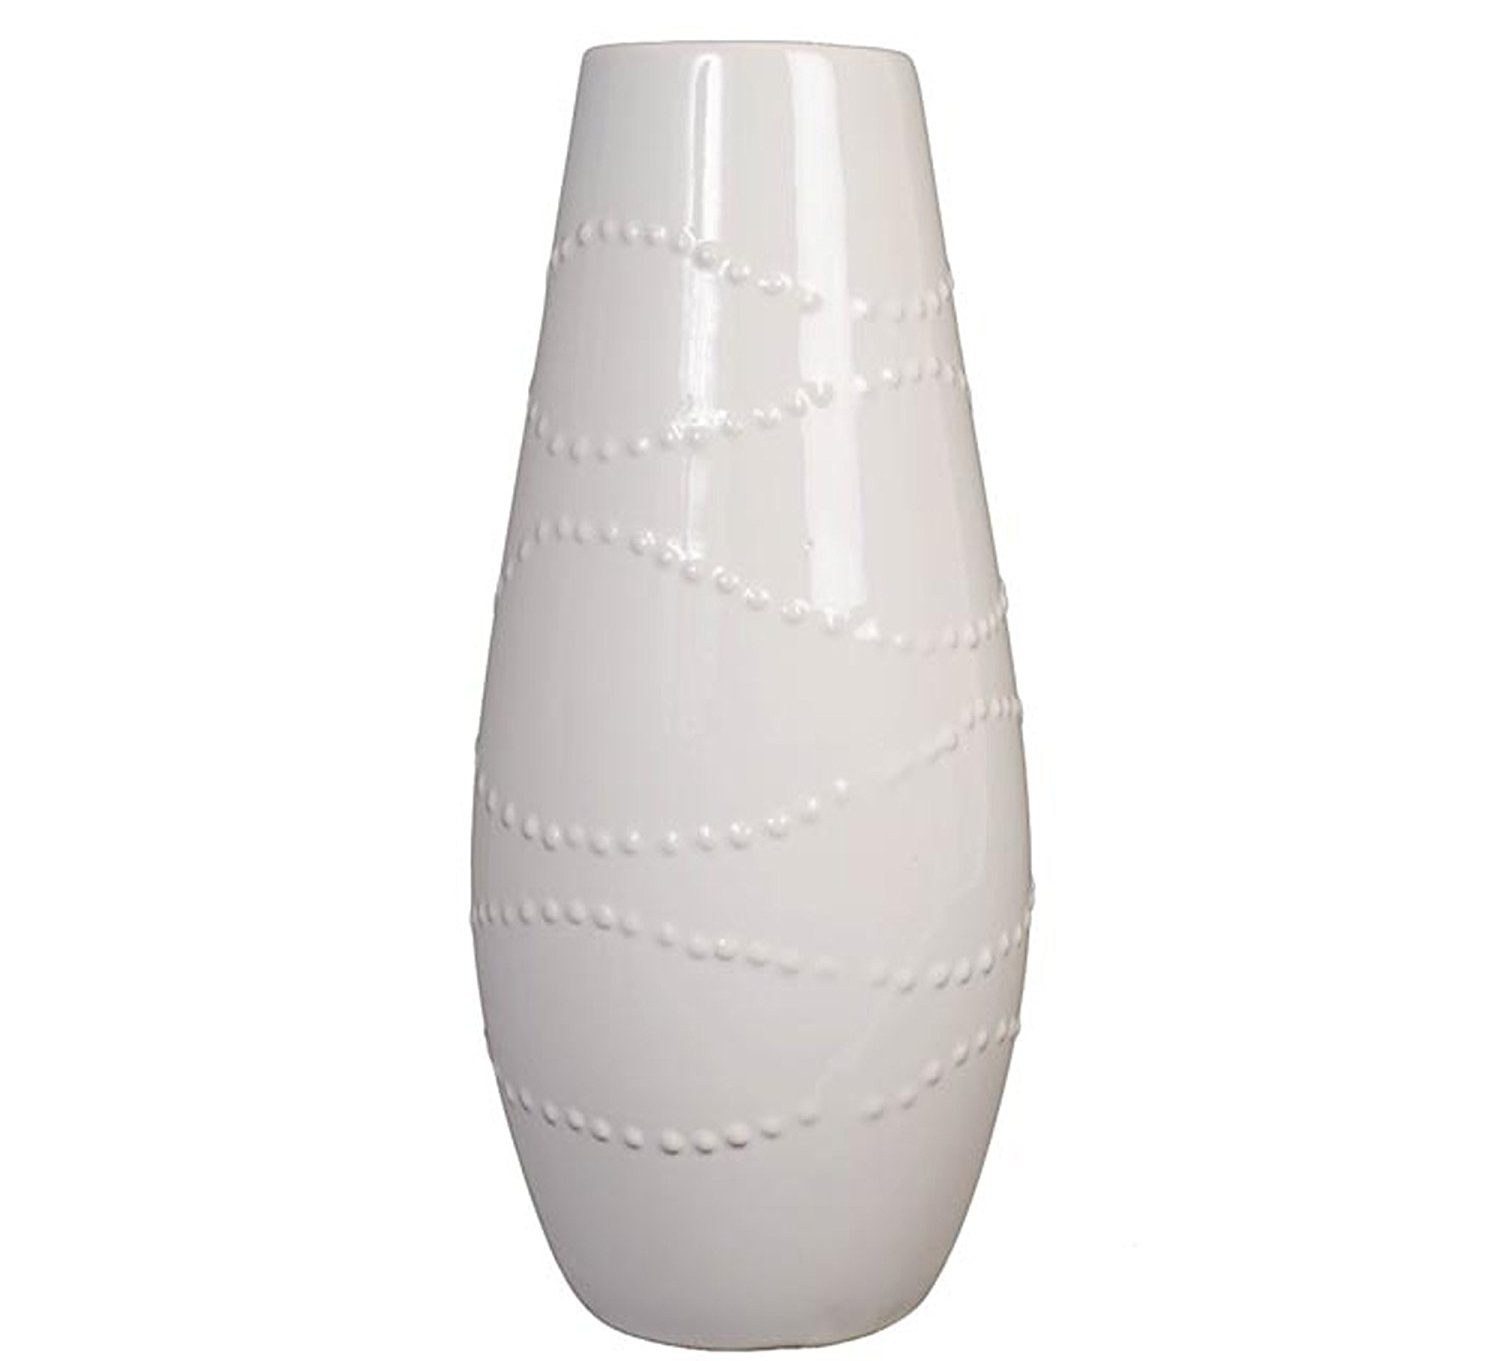 Hosley Large 12" Tall White Ceramic Vase